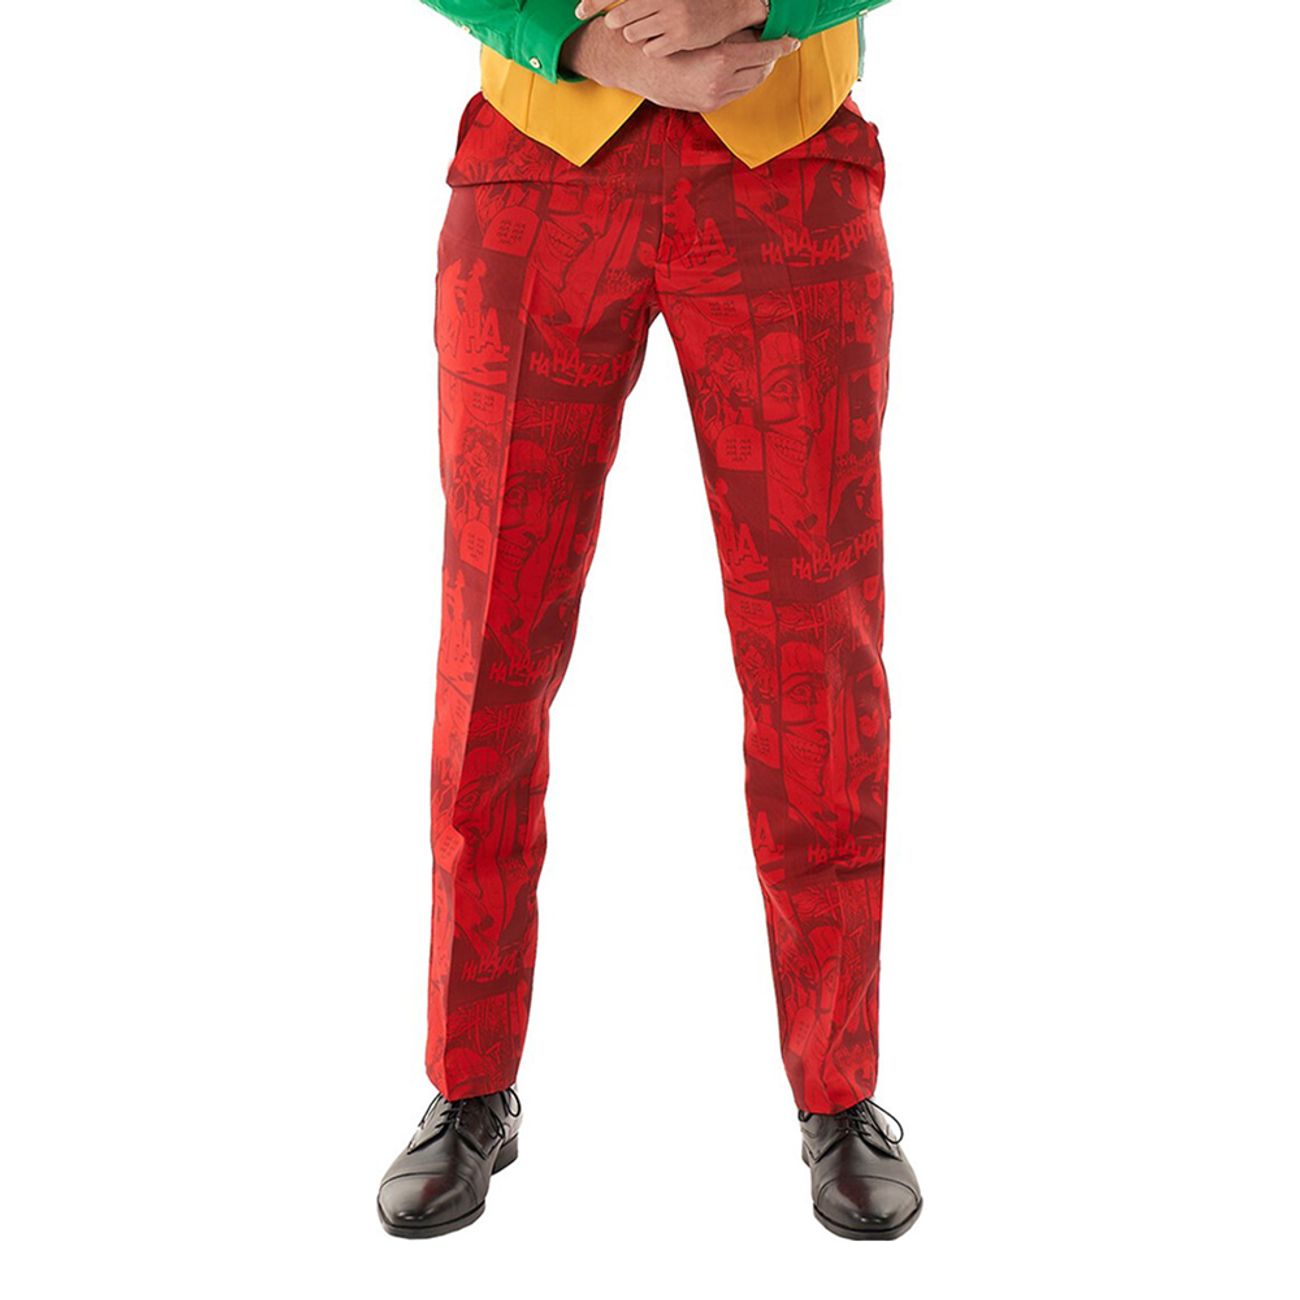 suitmeister-scarlet-joker-kostym-72250-5